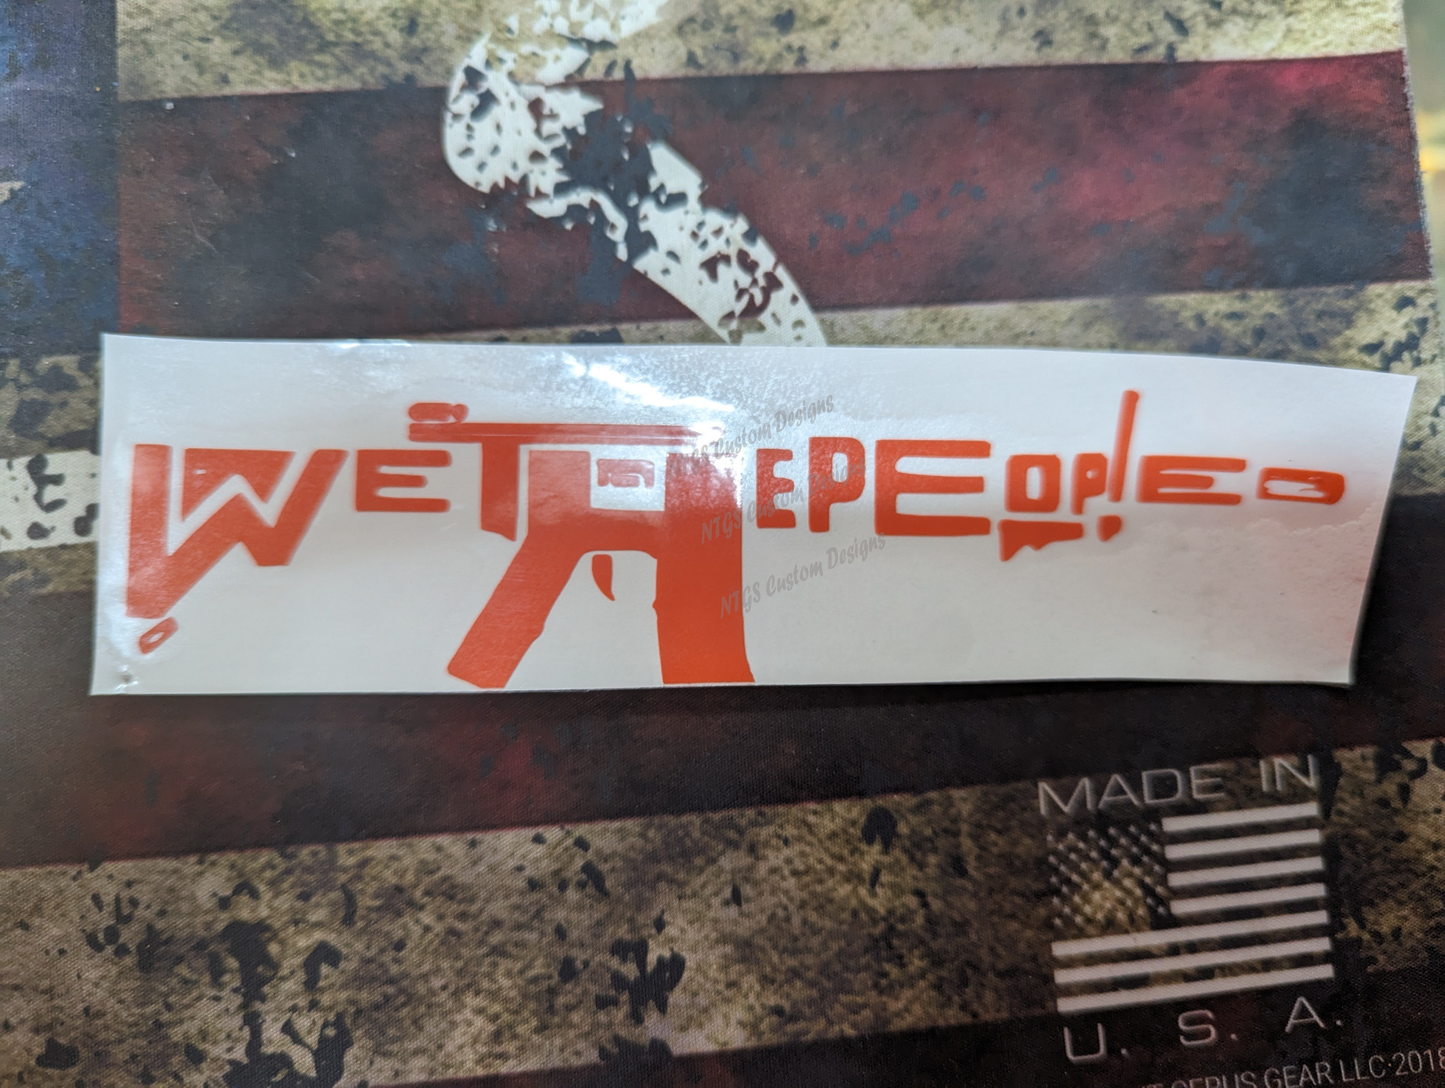 shaped gun-"We the People"